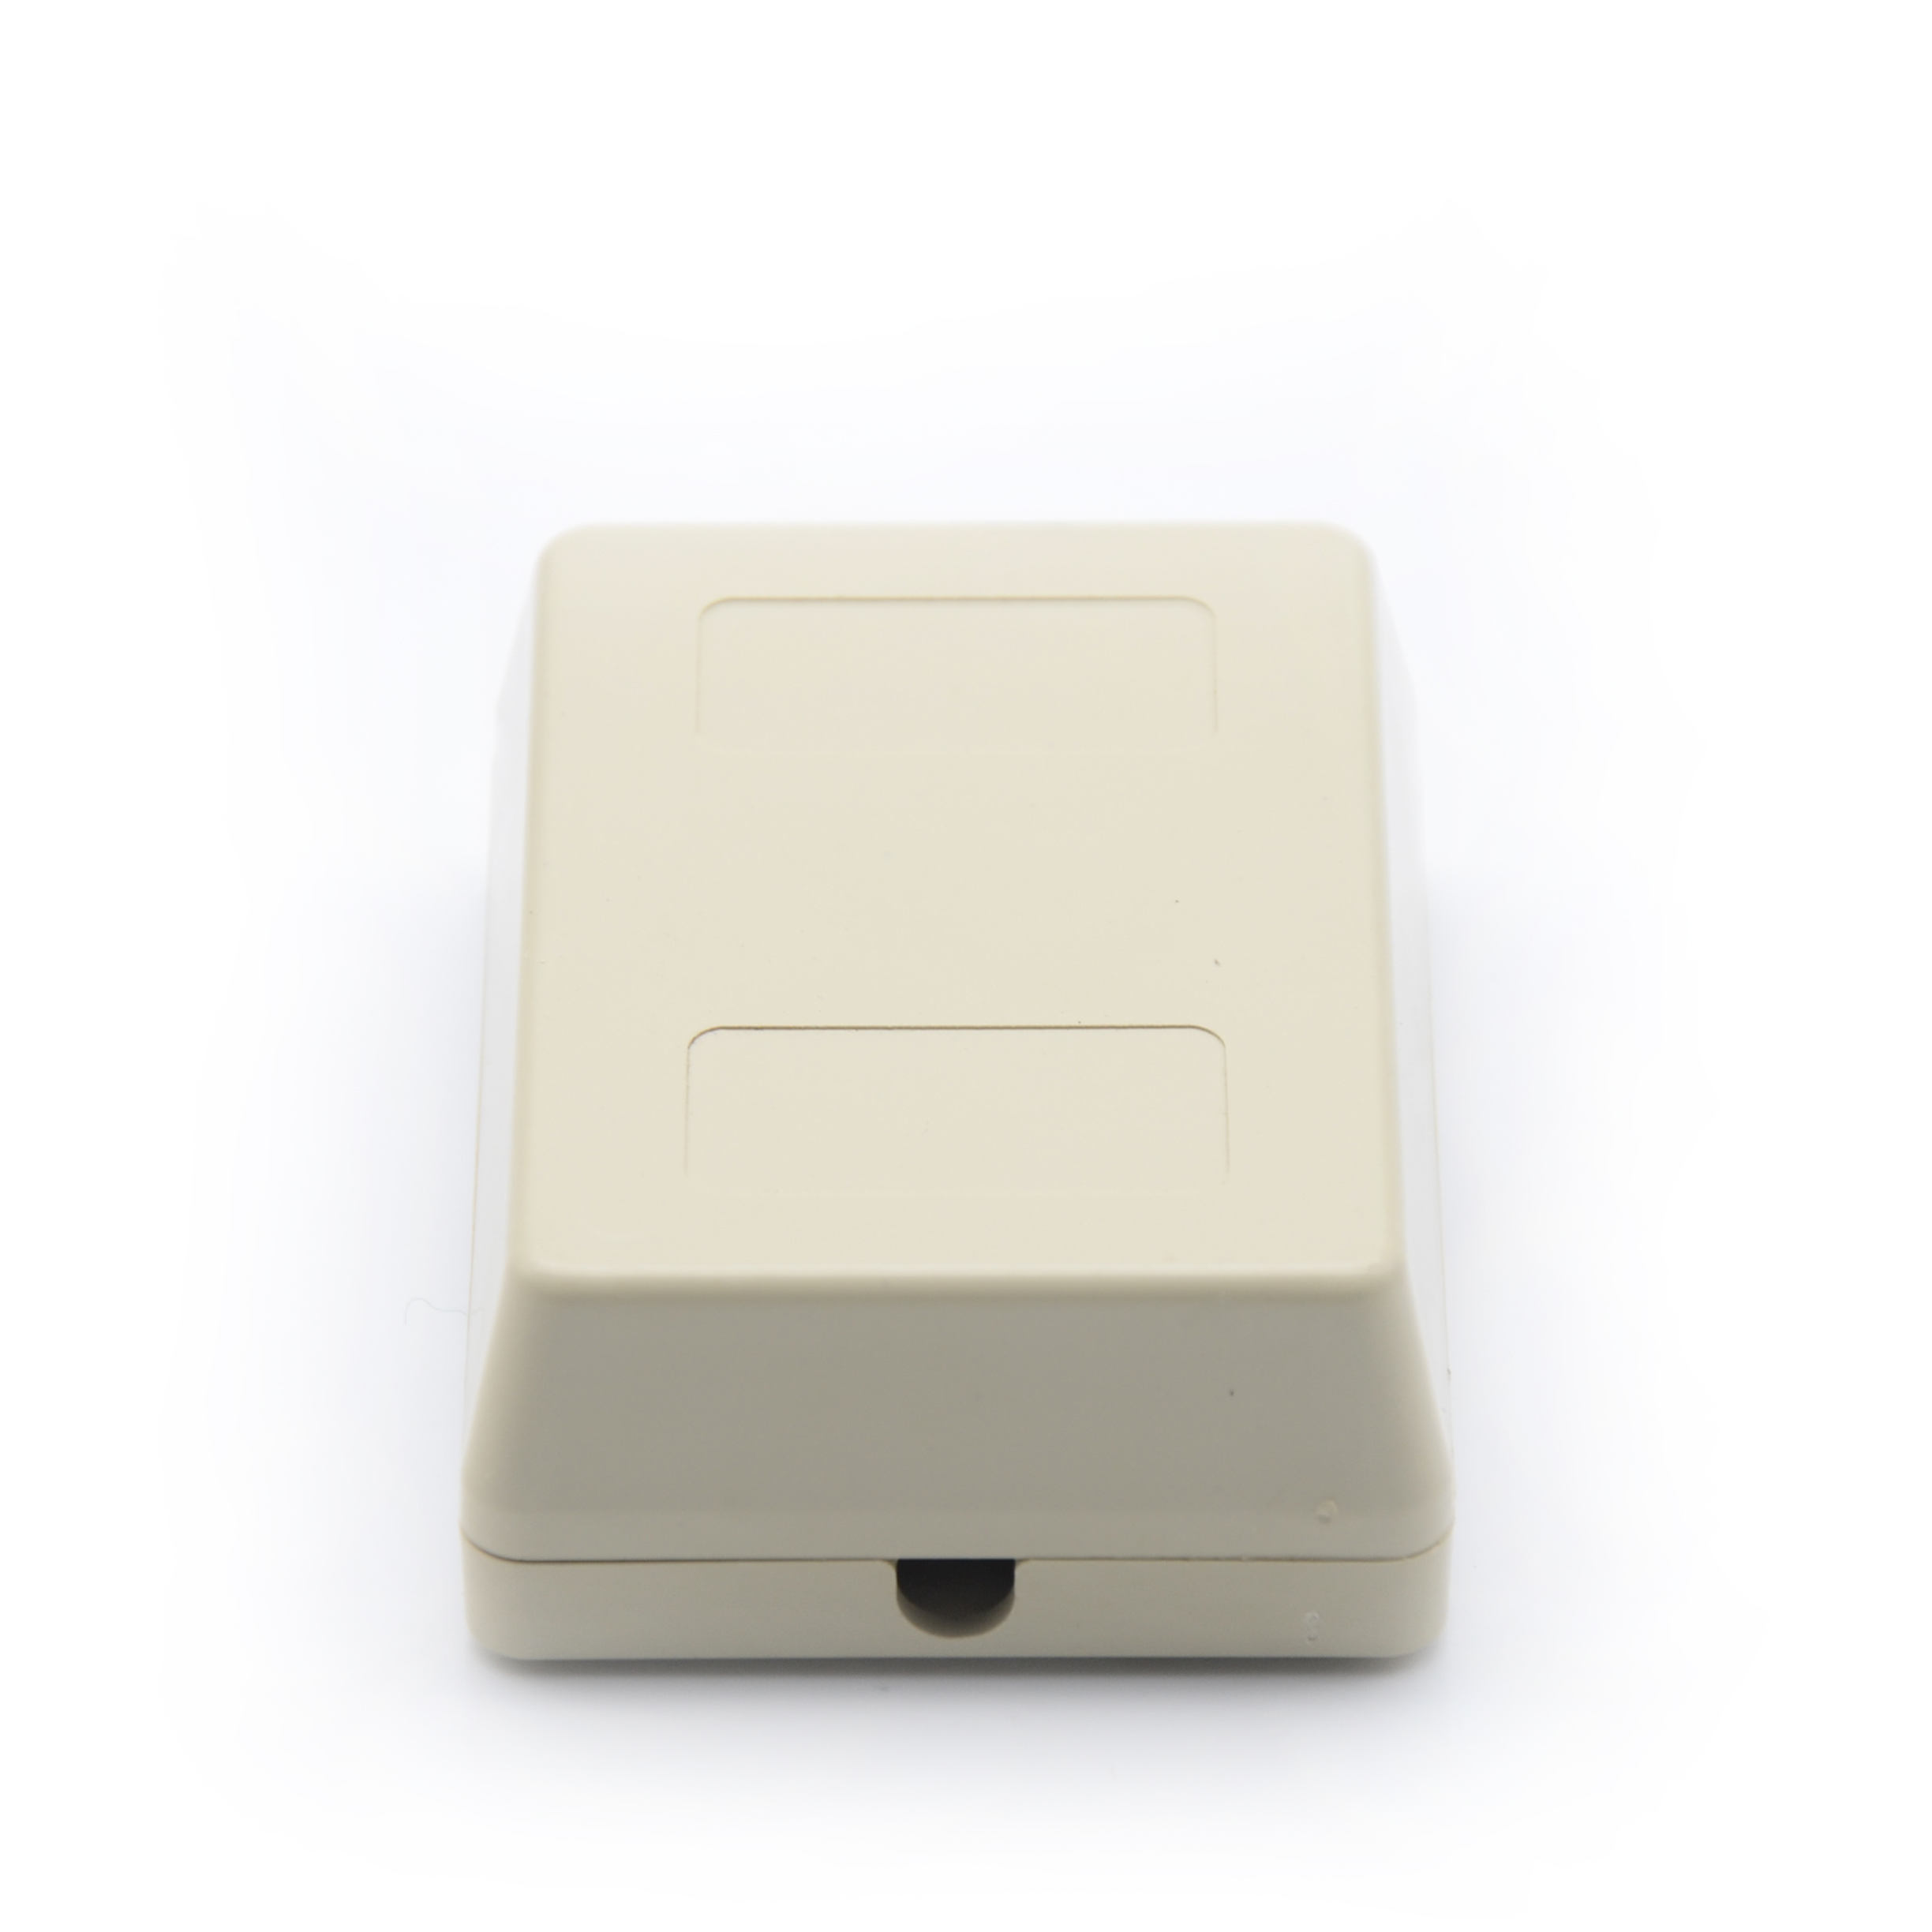 MT-5802 rectangle type RJ11 2 pin connection box rj11telecom outlet telephone surface box